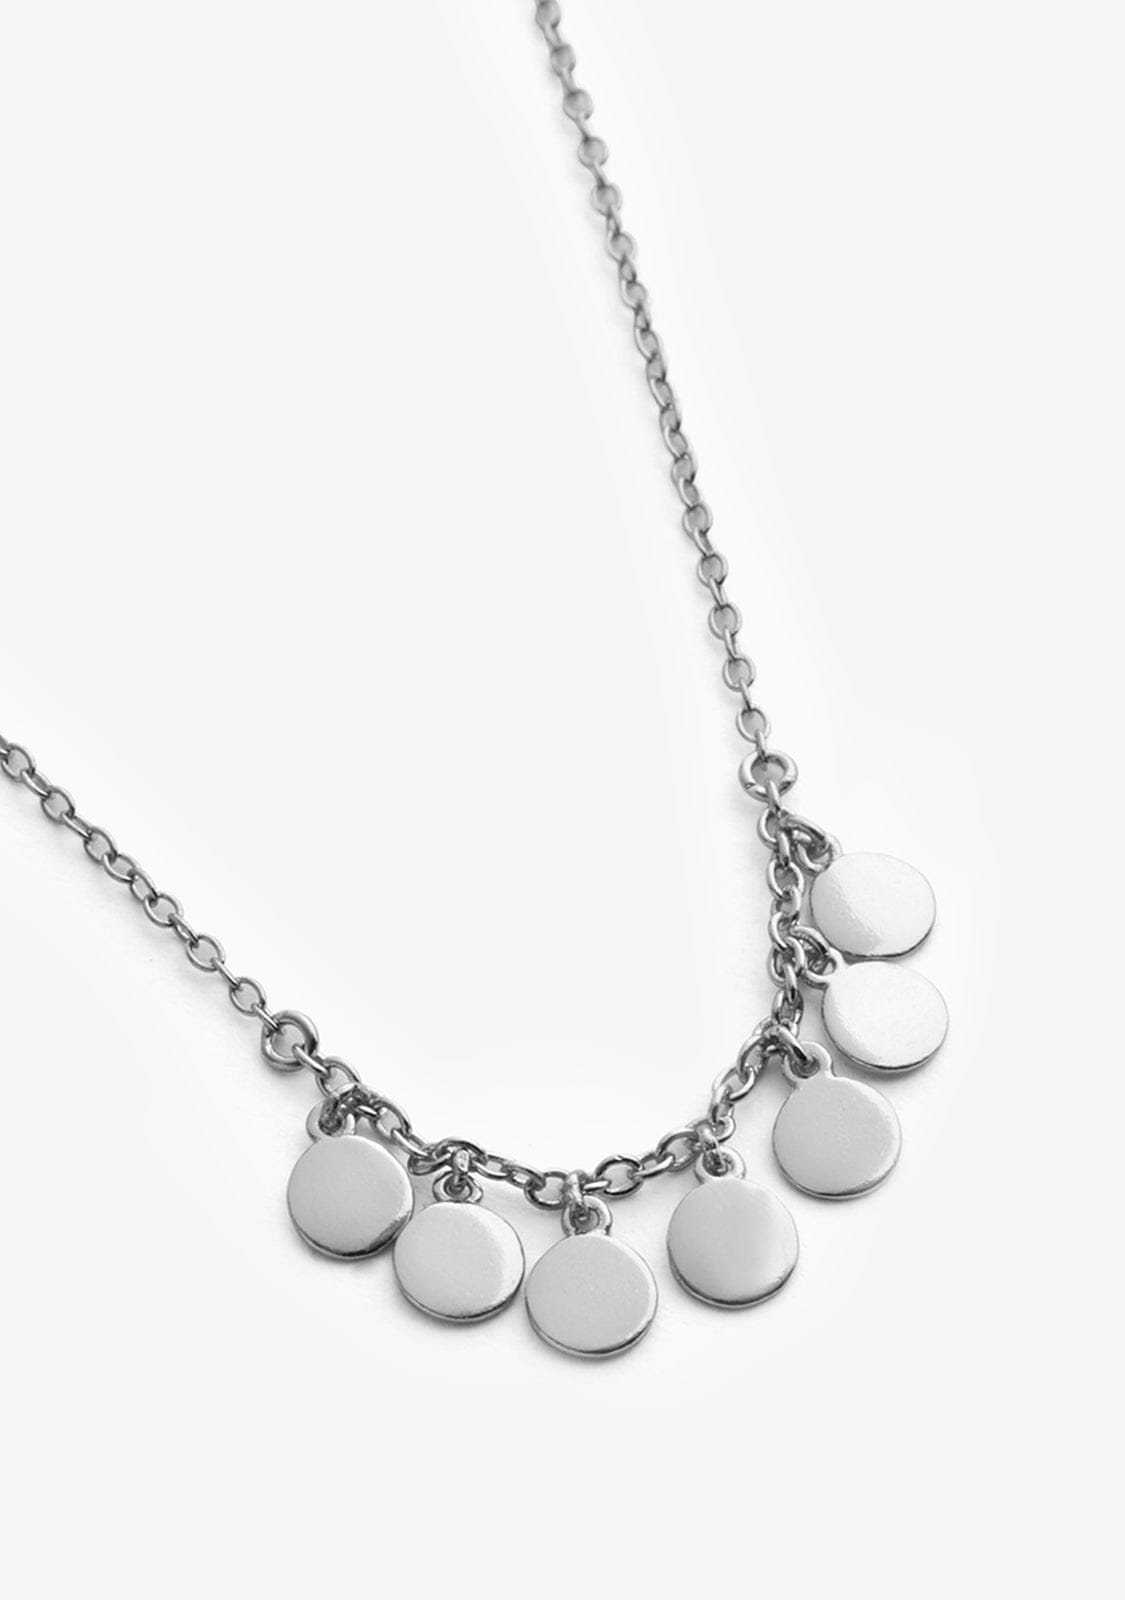 Necklace Coins Silver